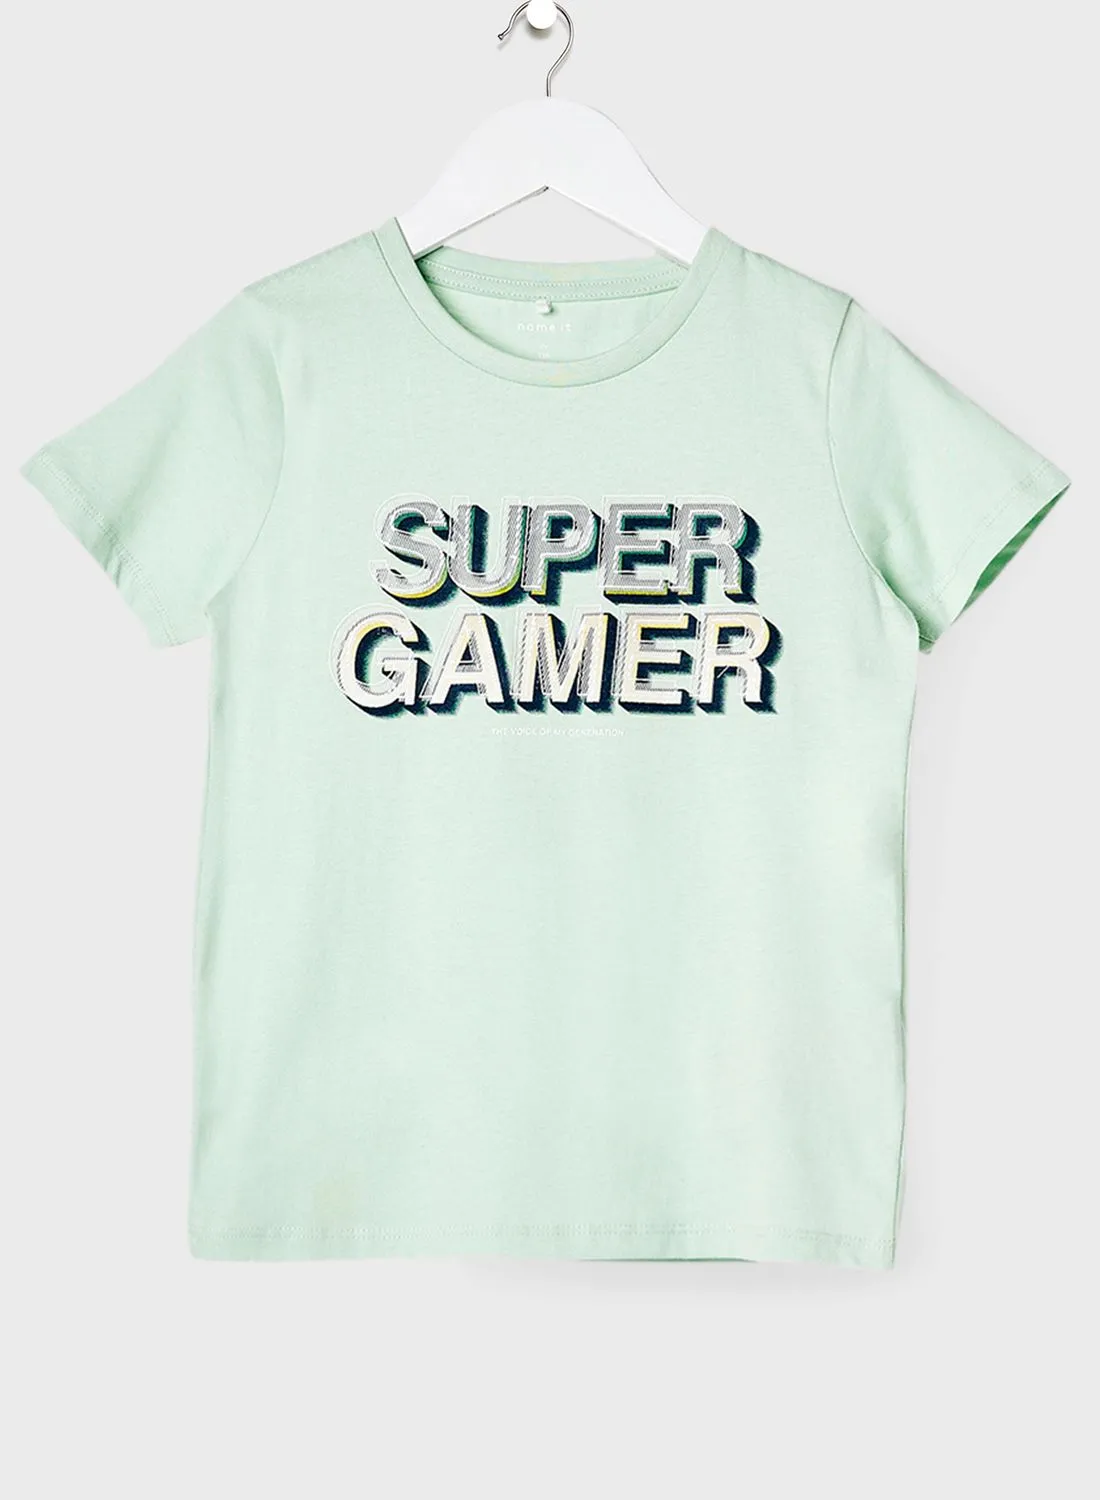 NAME IT Kids Super Gamer T-Shirt